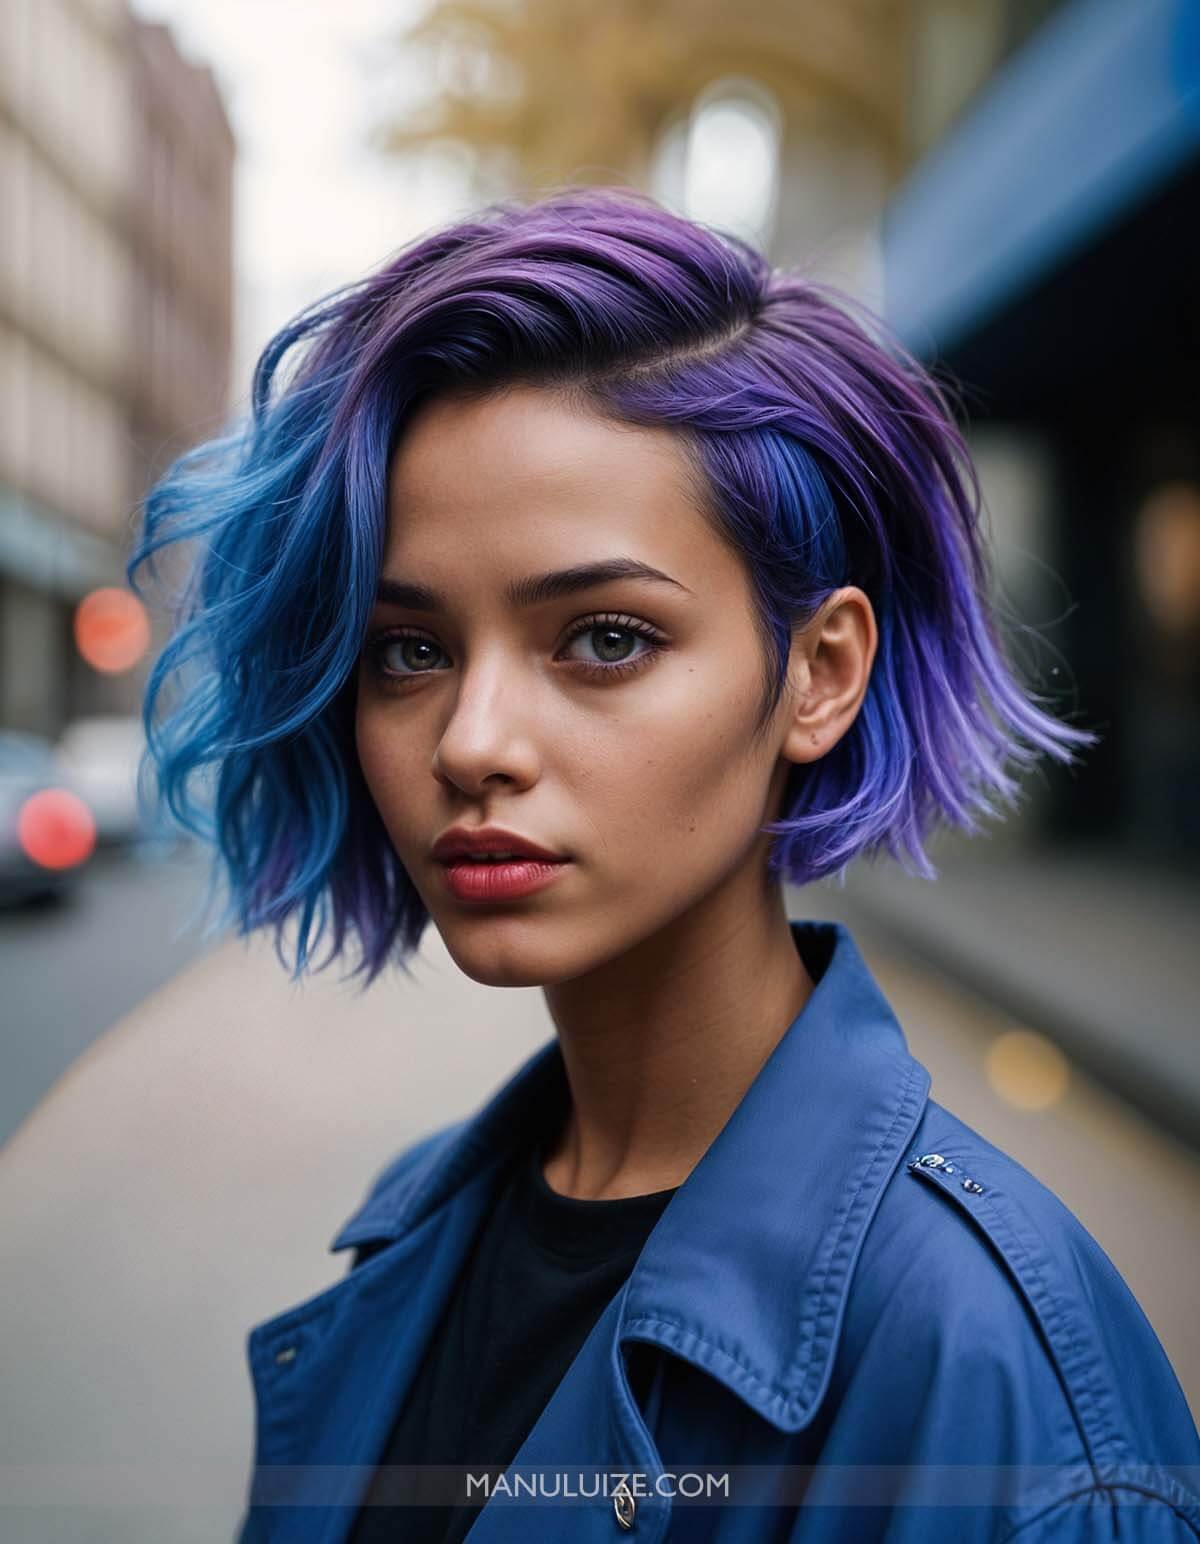 Vivid blue and purple hair